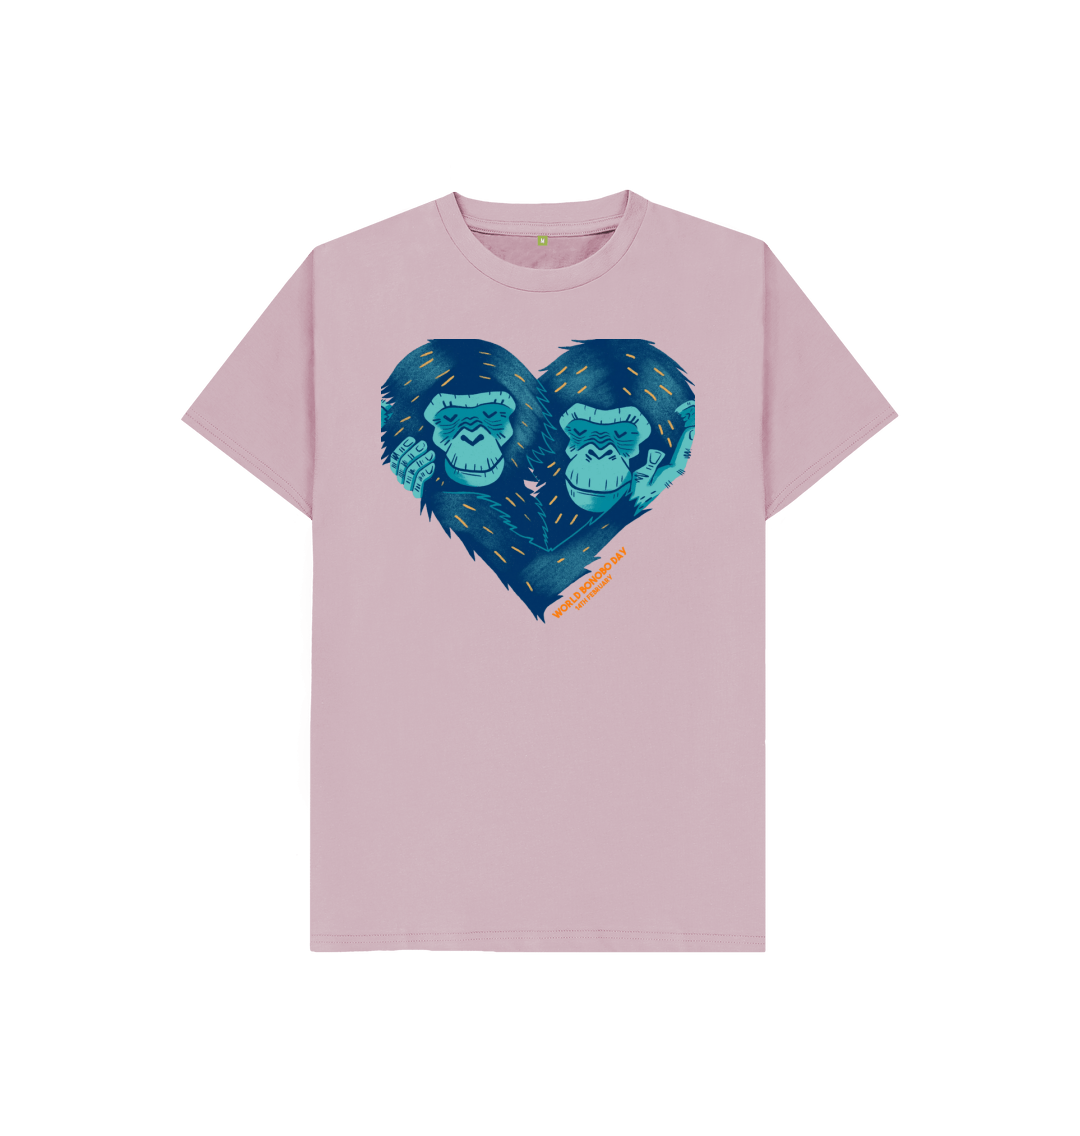 Bonobo Day T-shirt Kids World